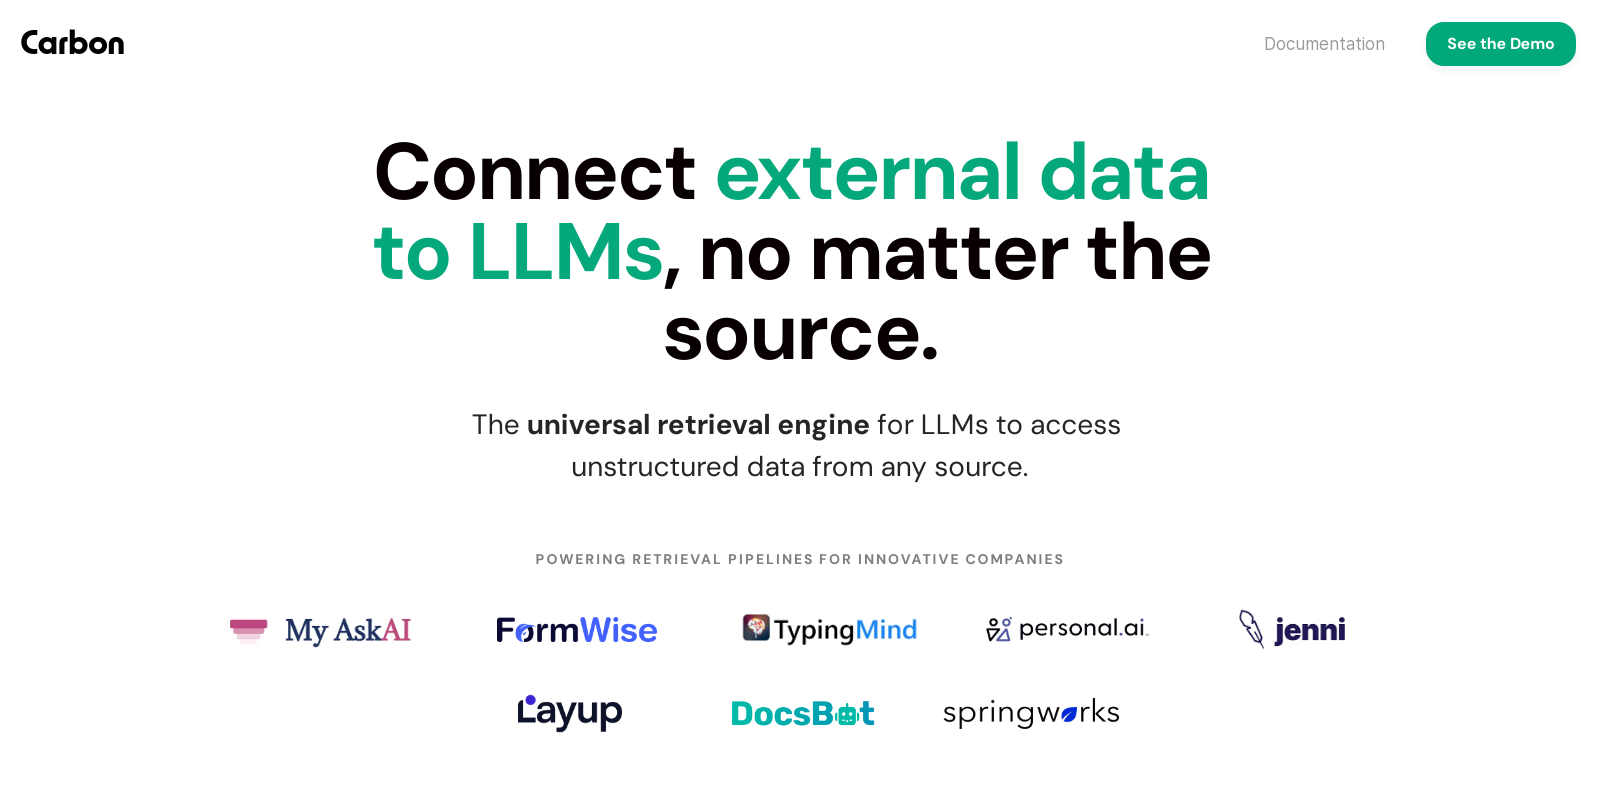 Carbon AI: Connect external data to LLMs